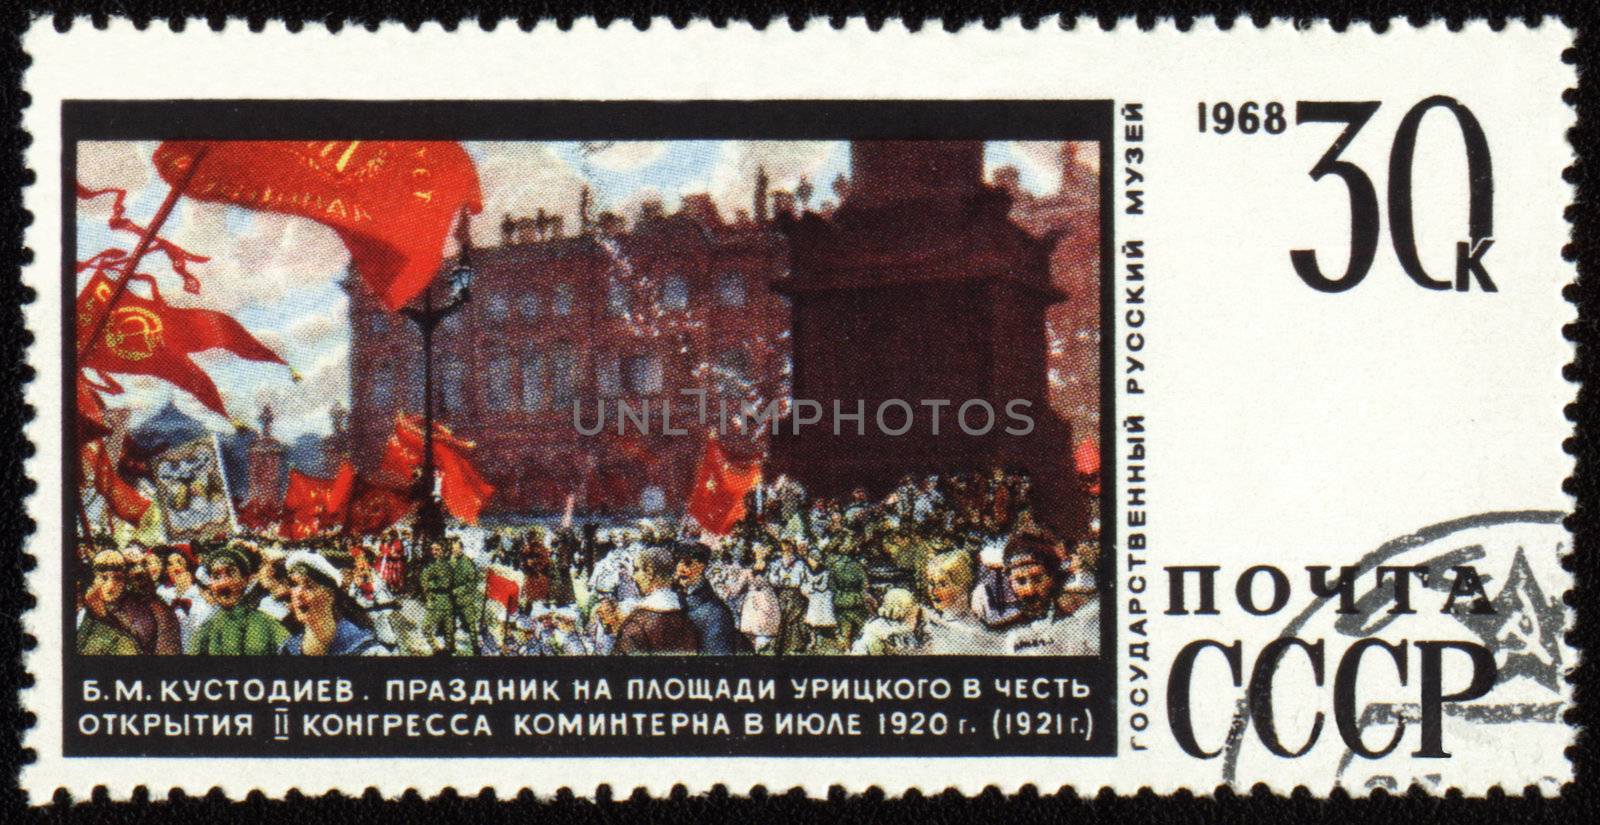 Picture "Celebration on Uritsky Square" by Boris Kustodiev on post stamp by wander